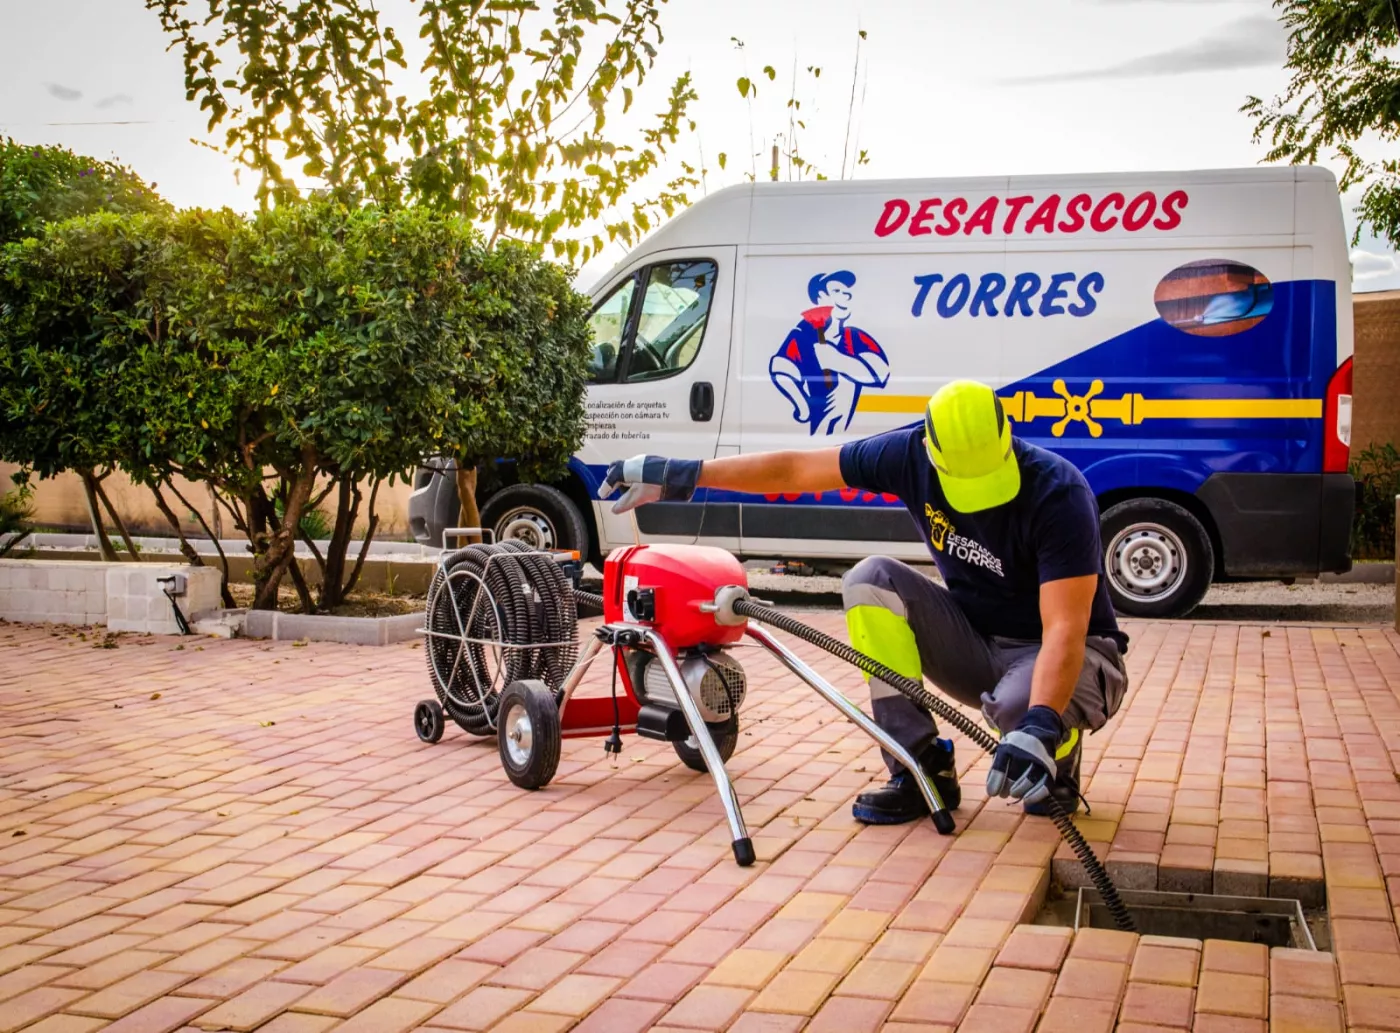 Desatascos Torres Murcia furgona con tipo desatascador